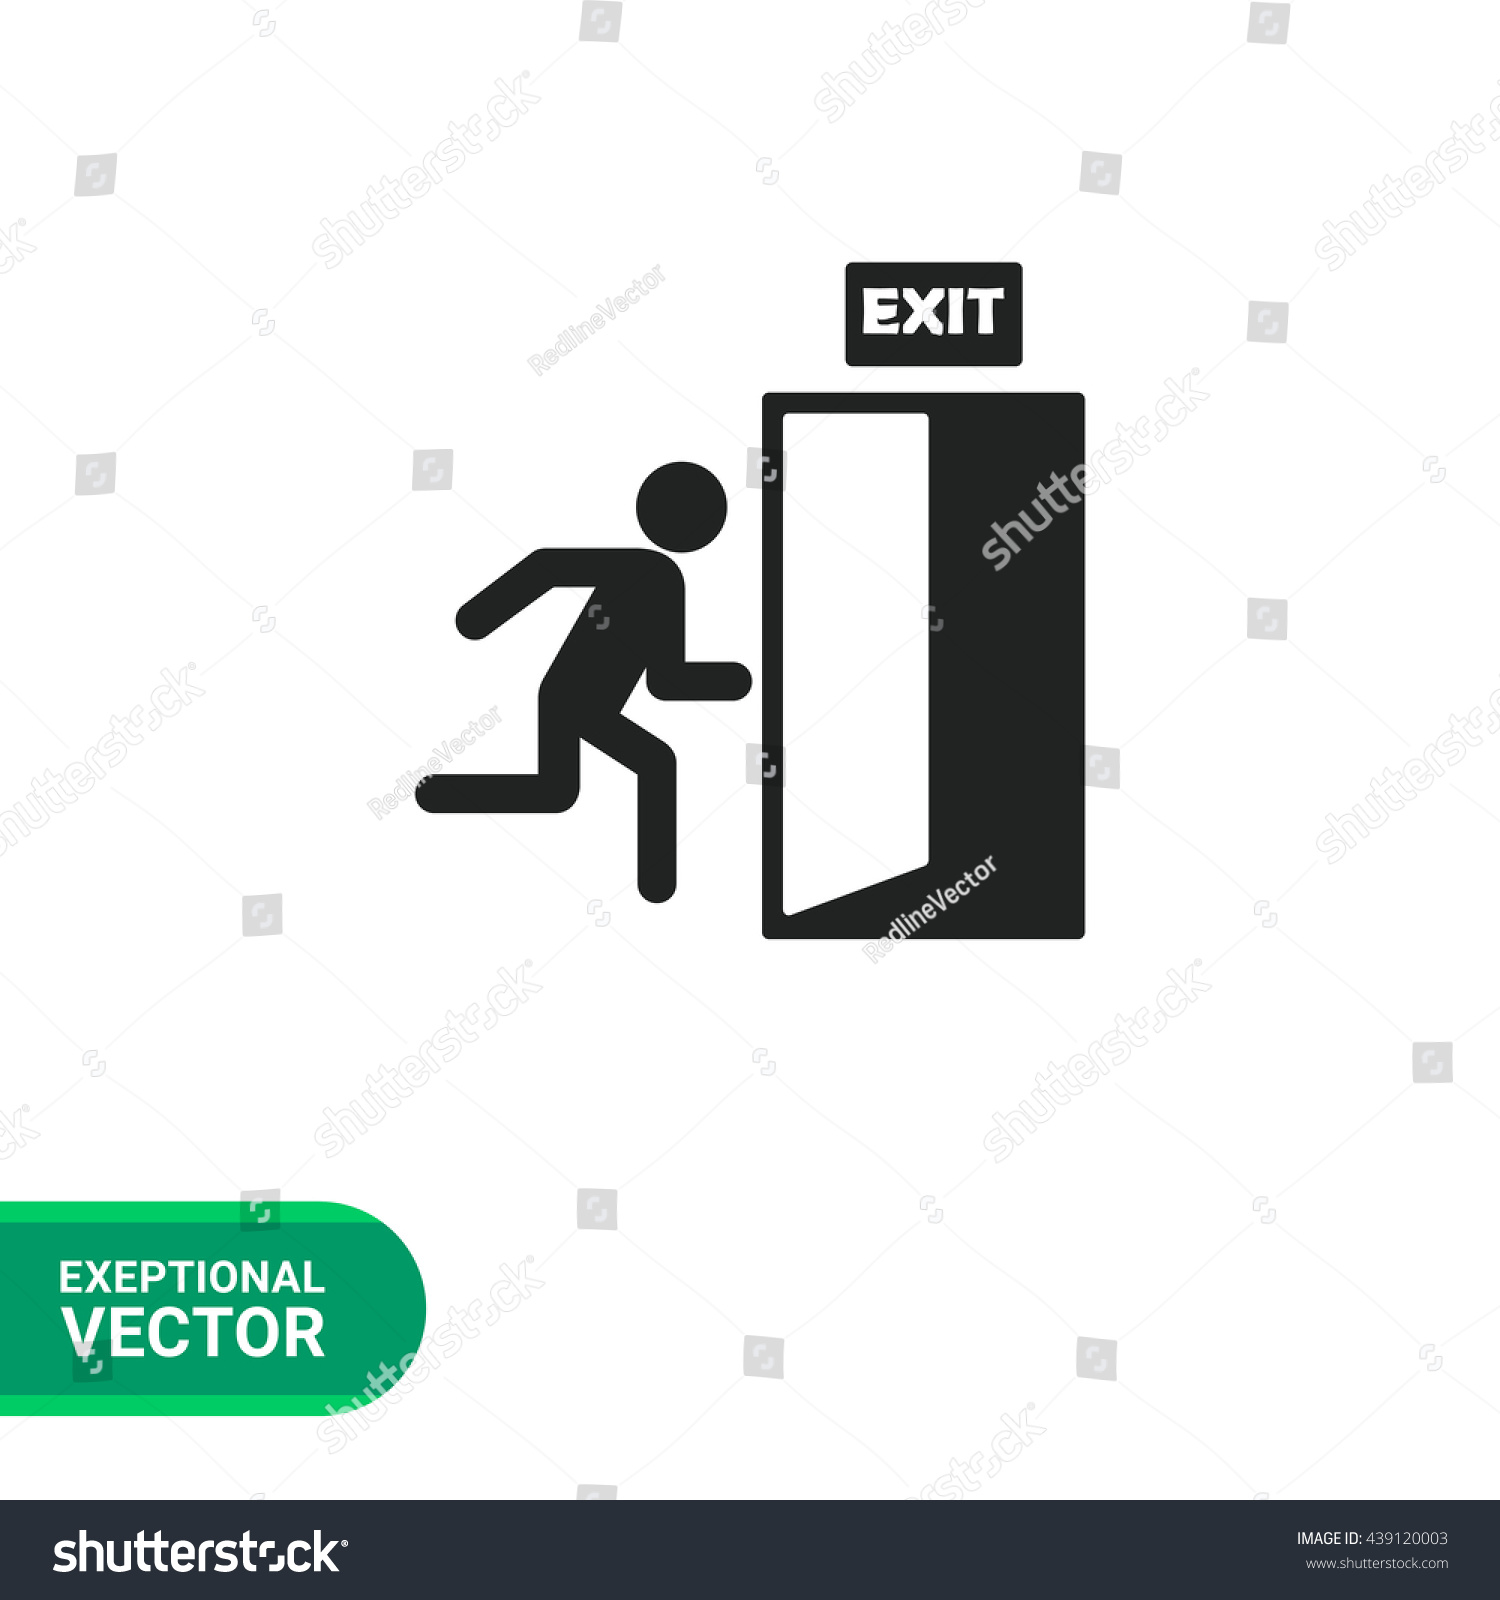 Emergency Exit Sign Stock Vector 439120003 - Shutterstock